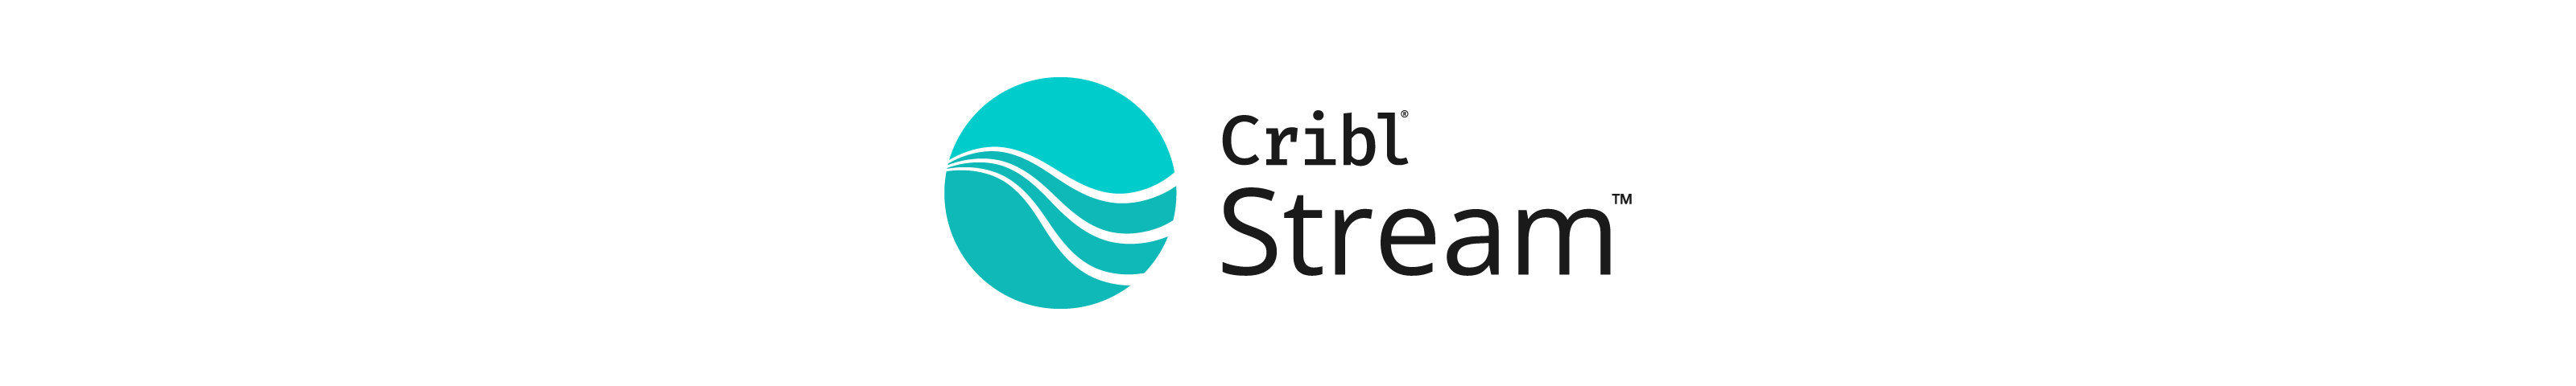 Cribl Stream logo for log ingestion and log monitoring